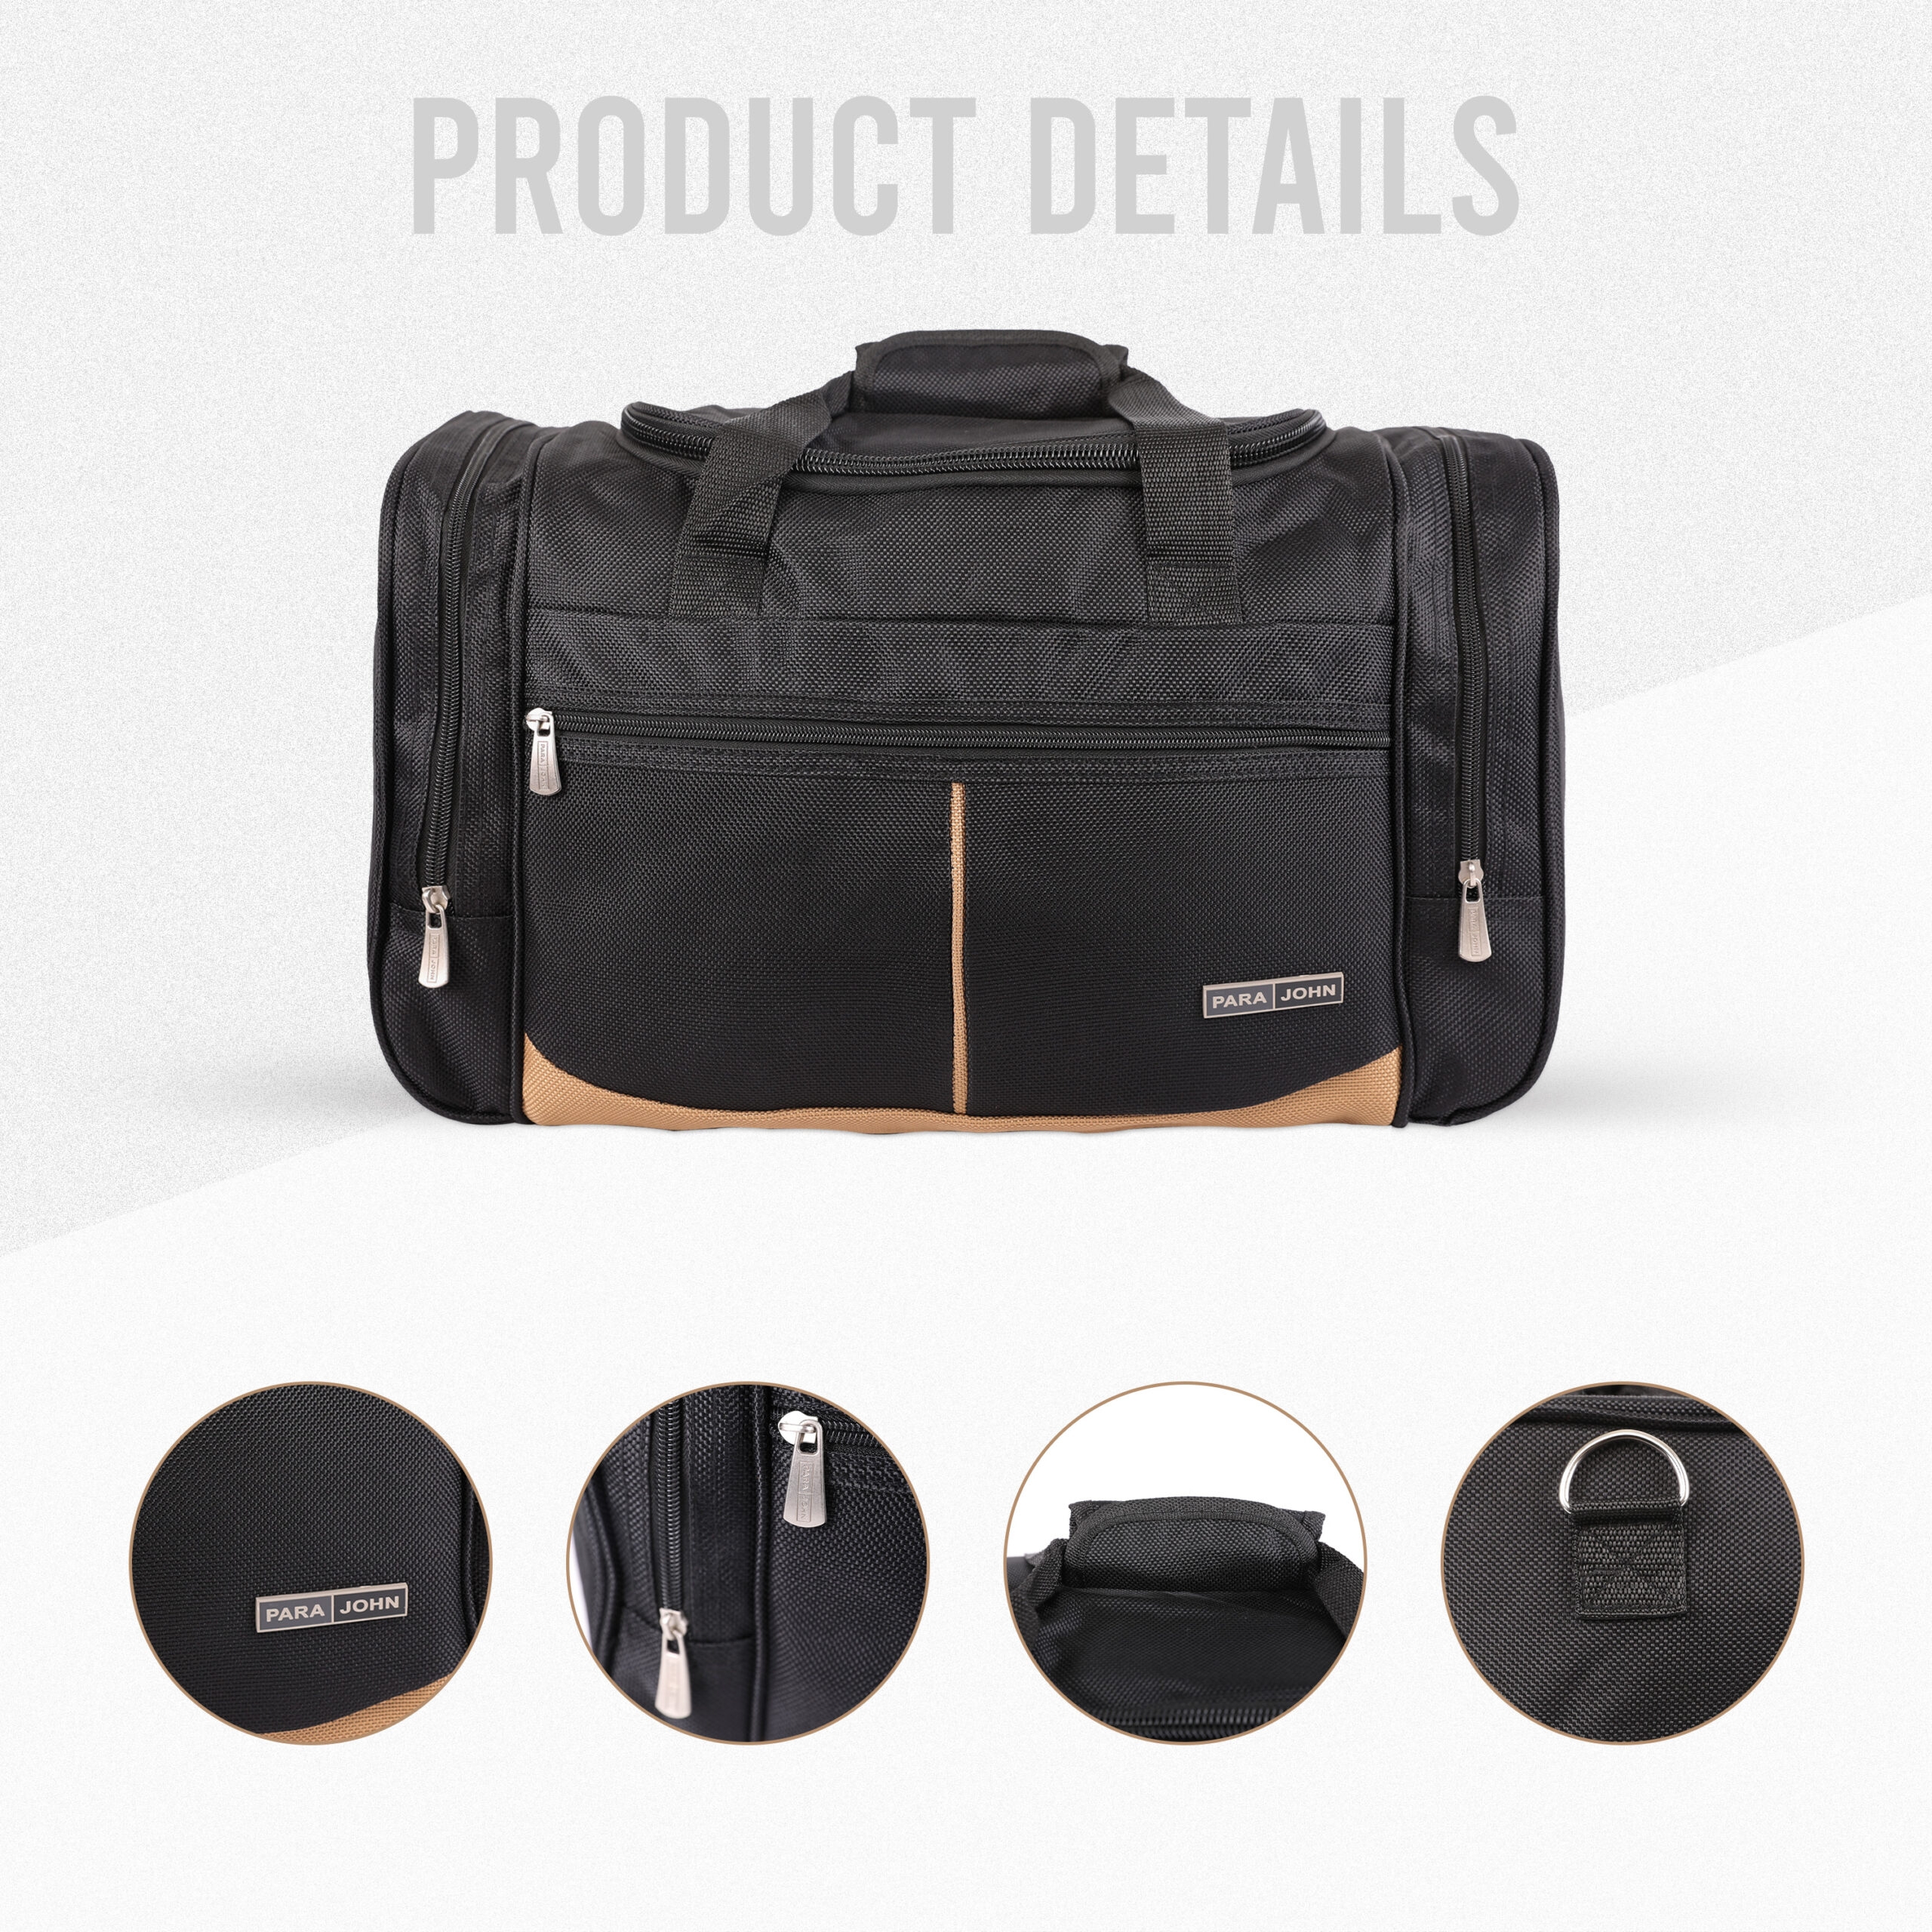 شنطة سفر (حقيبة سفر) - أسود  PARA JOHN Duffle Bag/Travel Bag